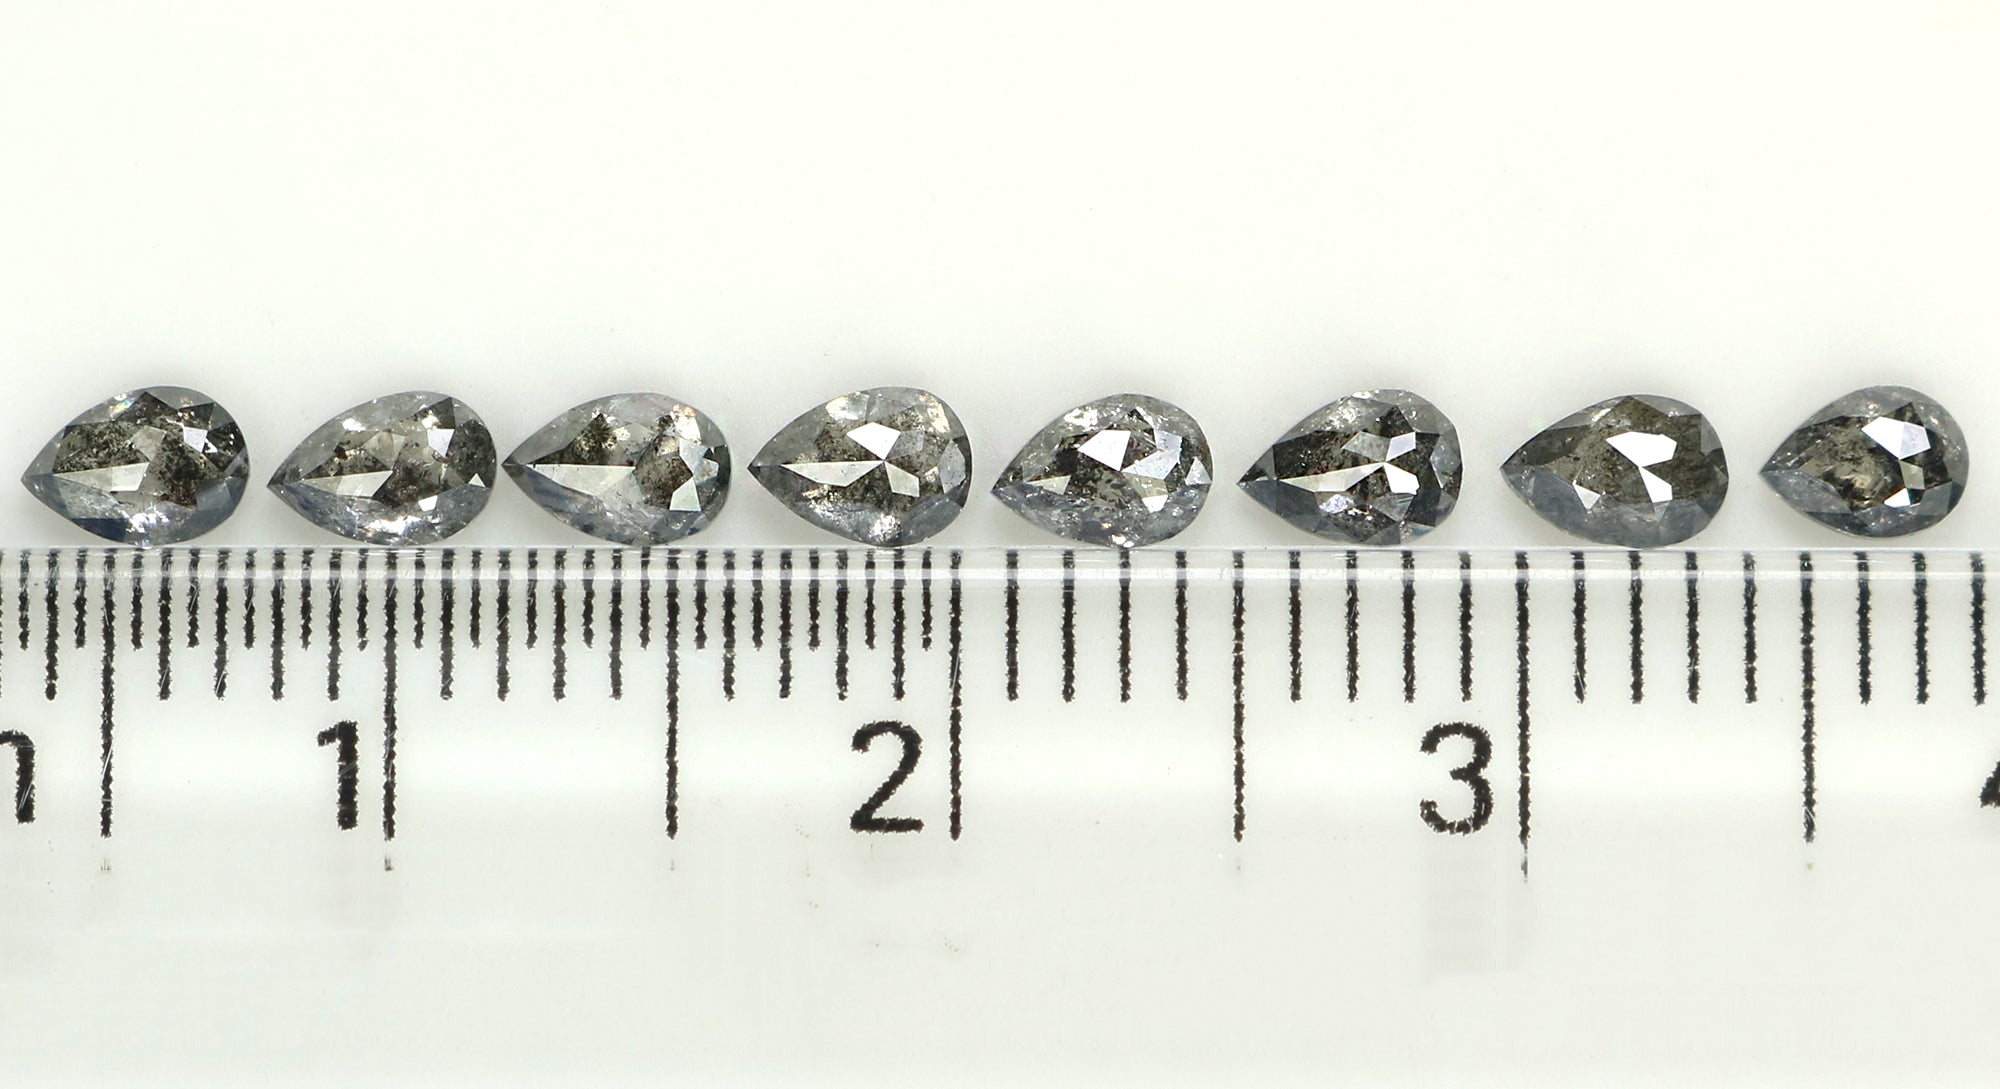 Natural Loose Pear Salt And Pepper Diamond Black Grey Color 1.11 CT 3.75 MM Pear Shape Rose Cut Diamond KDL1281